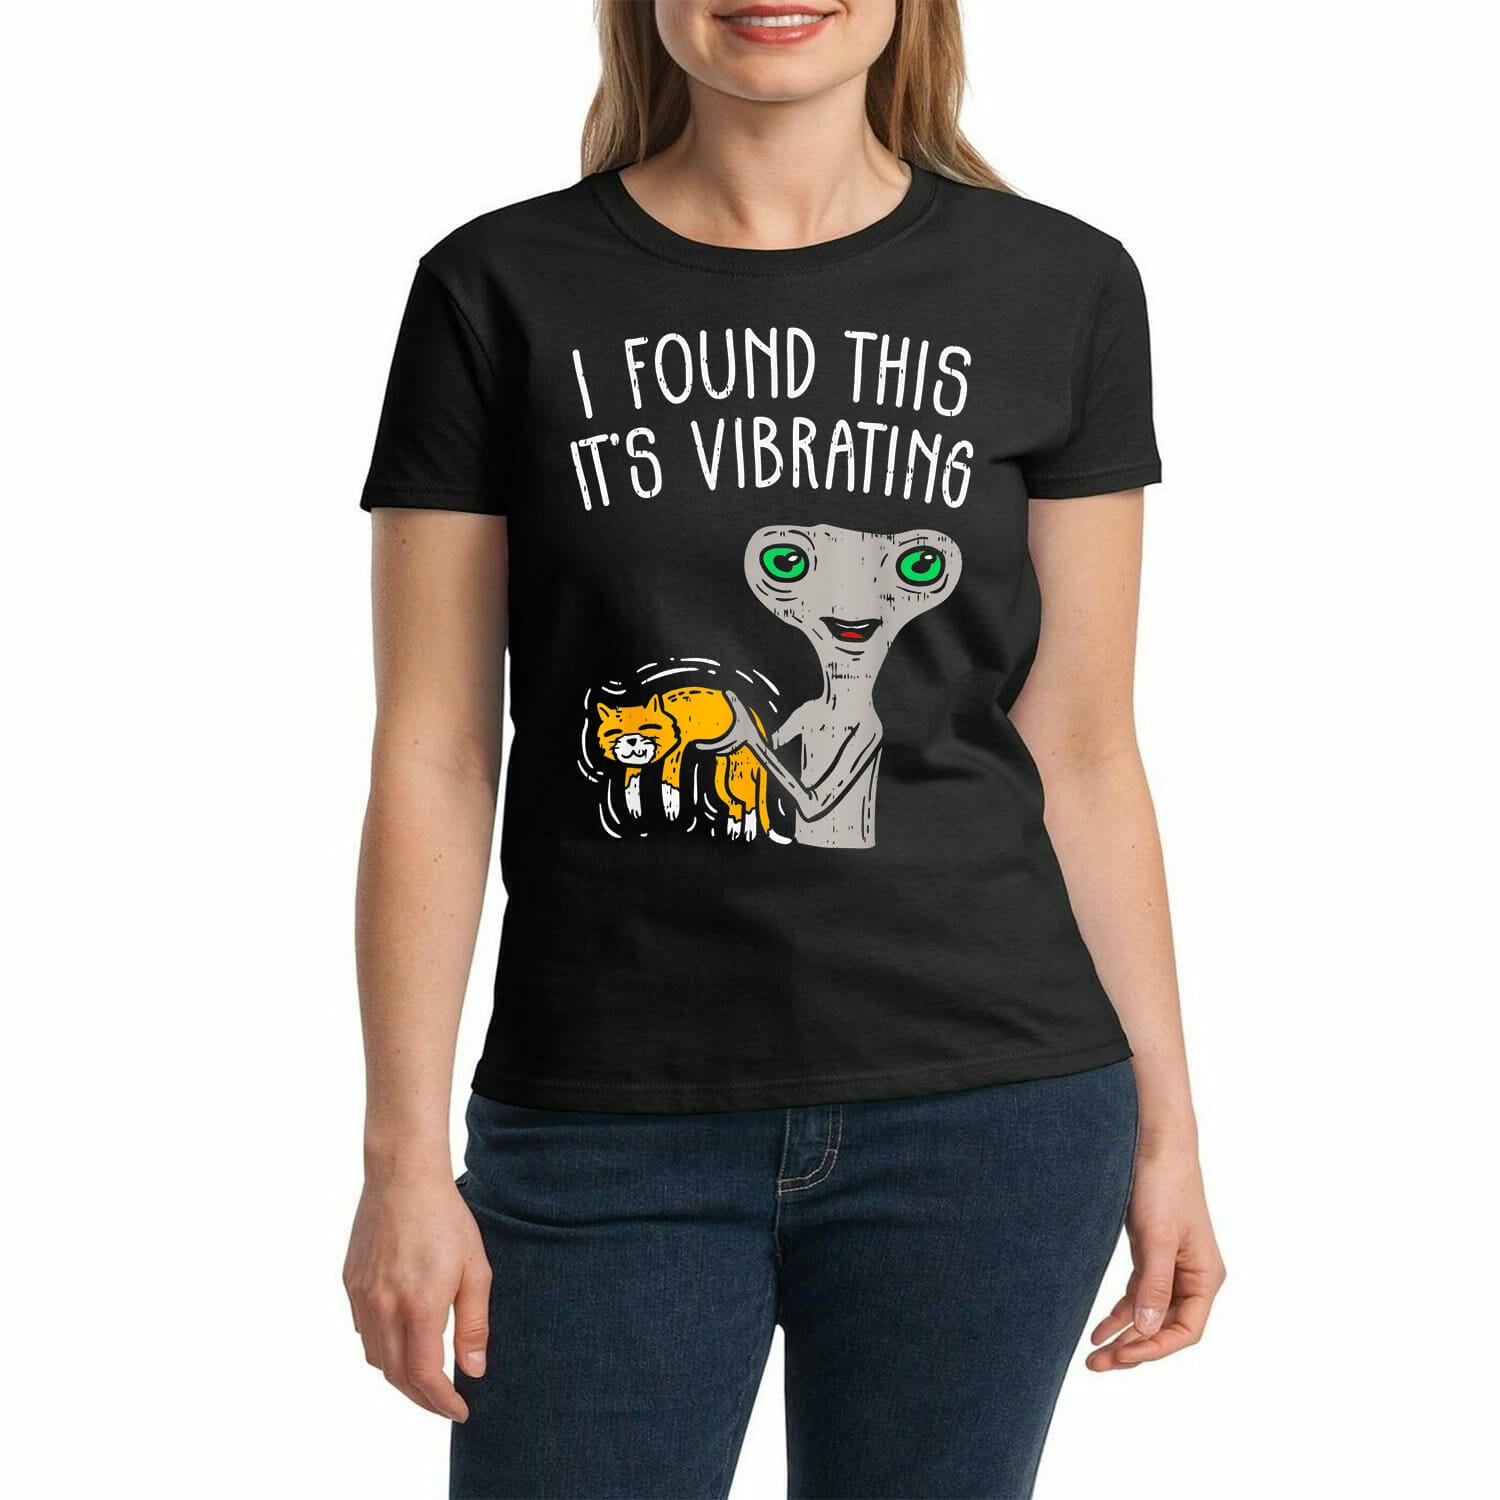 I found it its vibrating - alien tshirt design for women